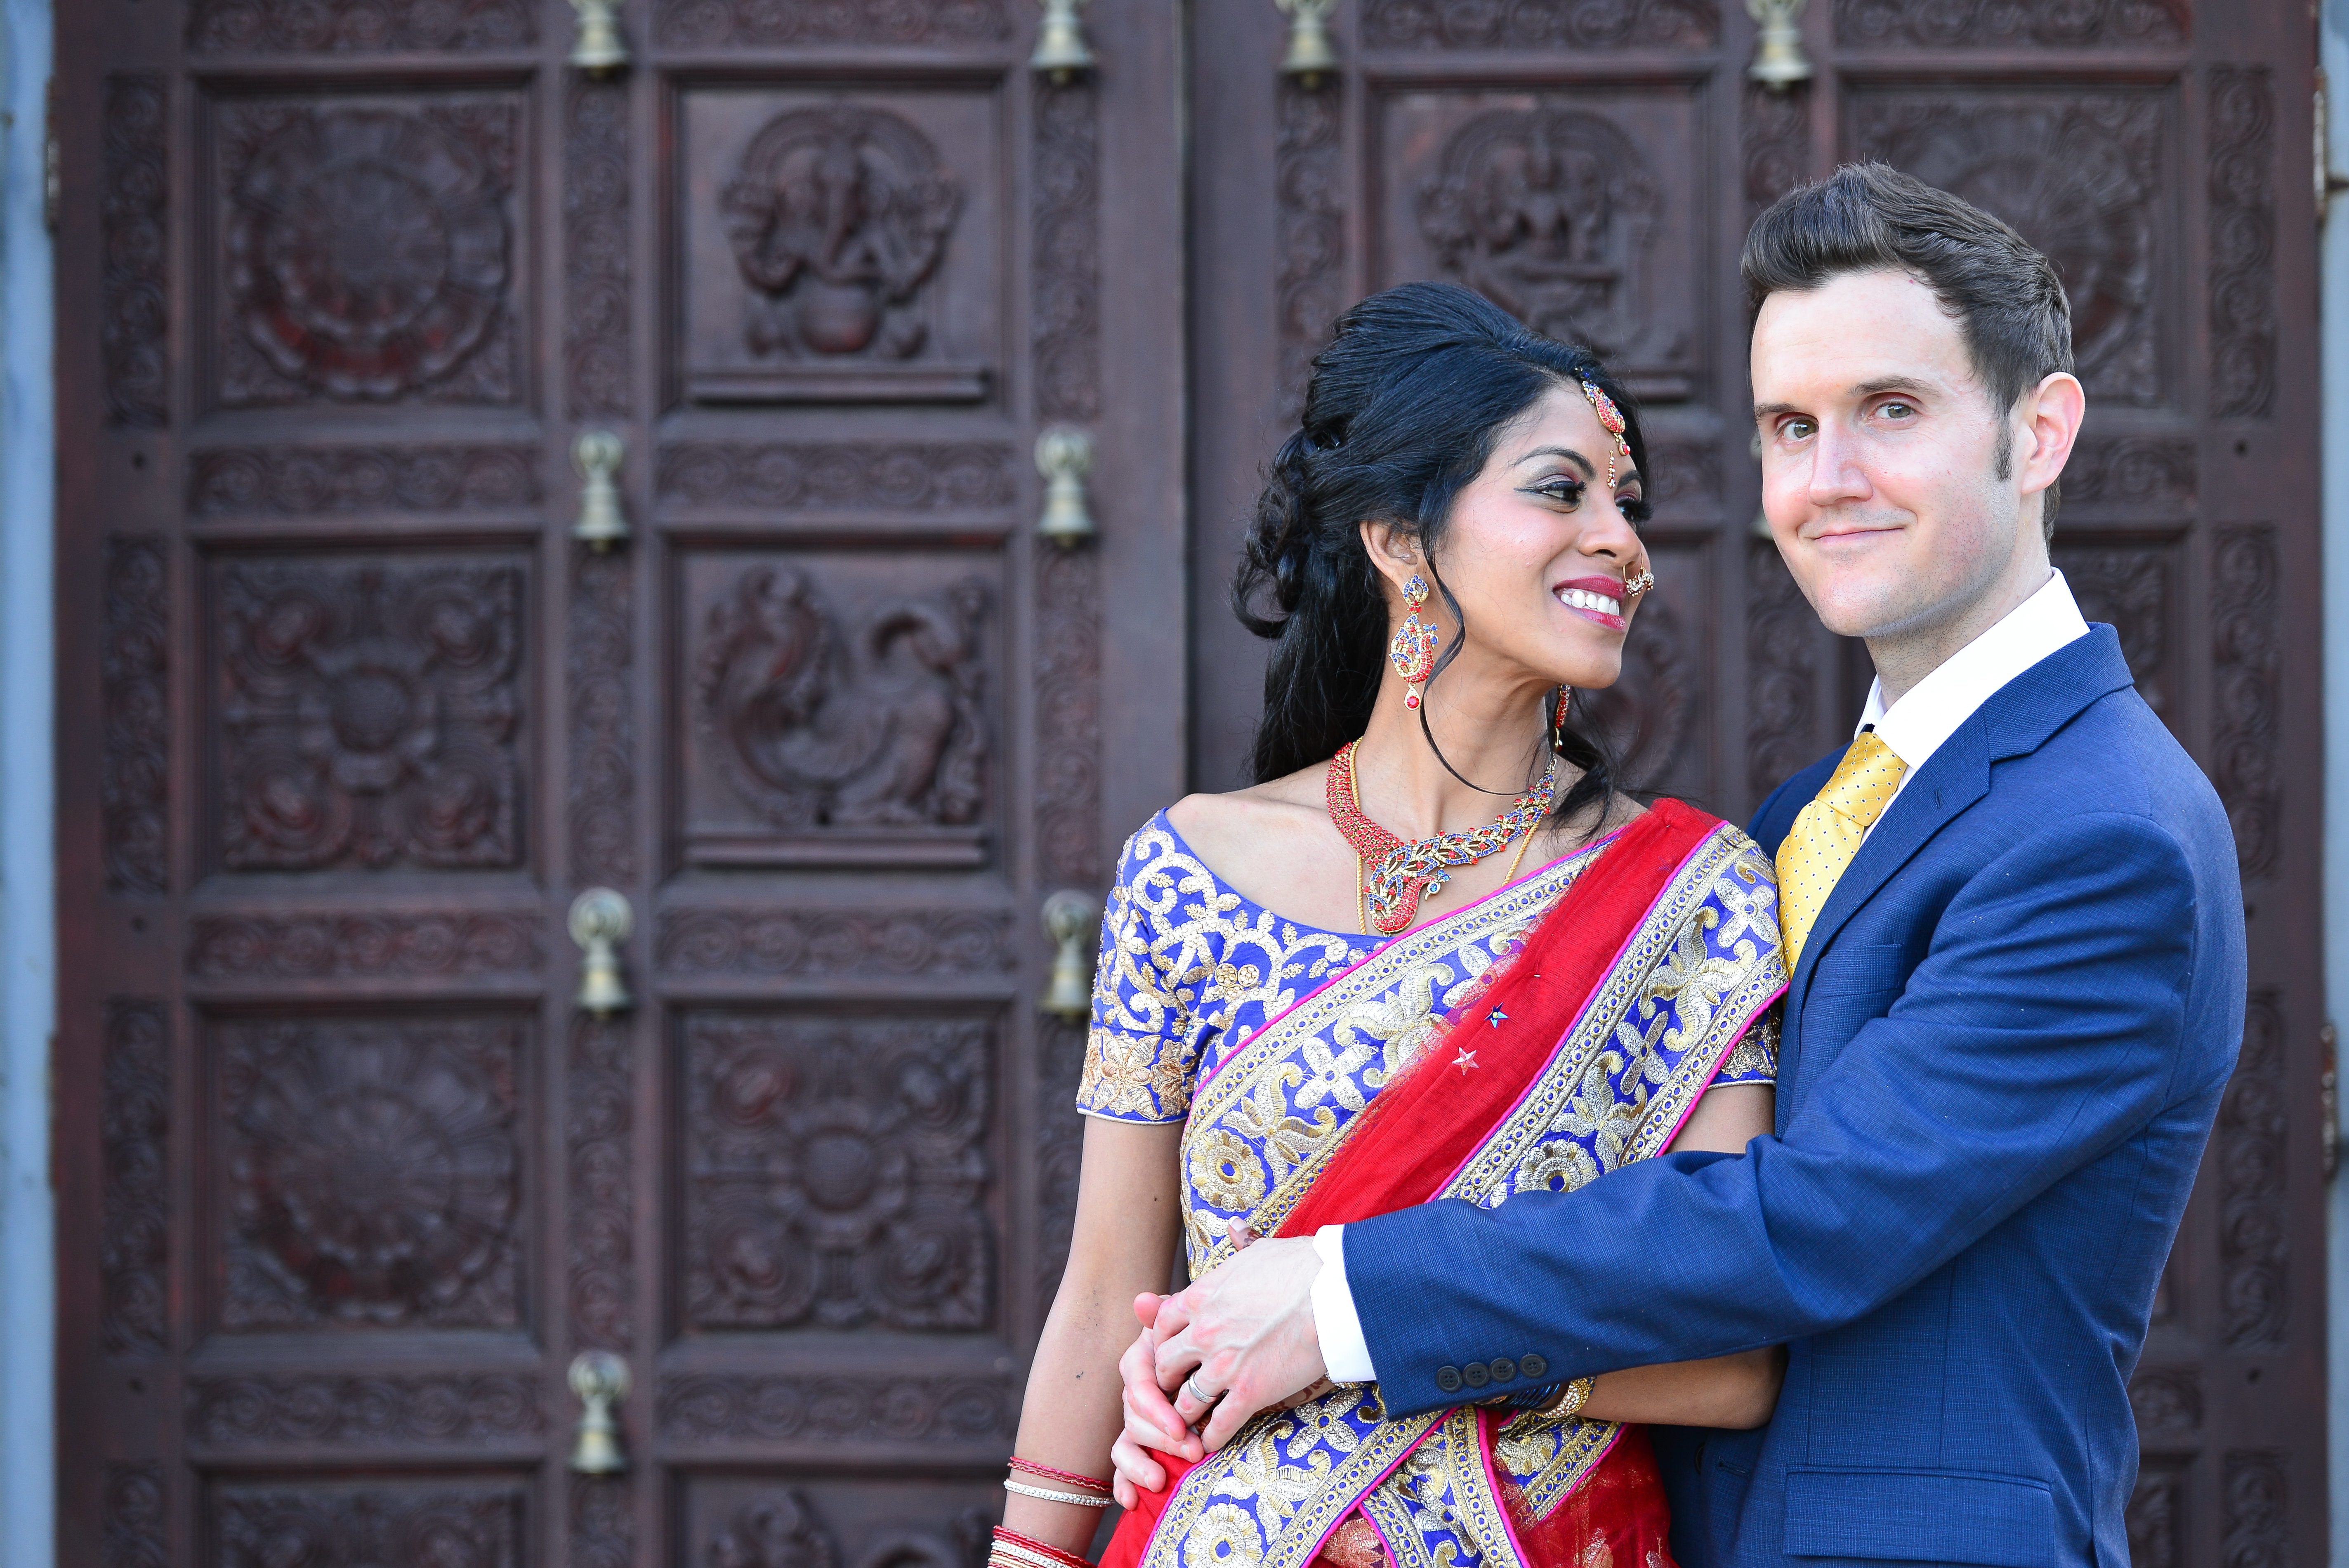 Sivakumaran and her husband on their wedding day